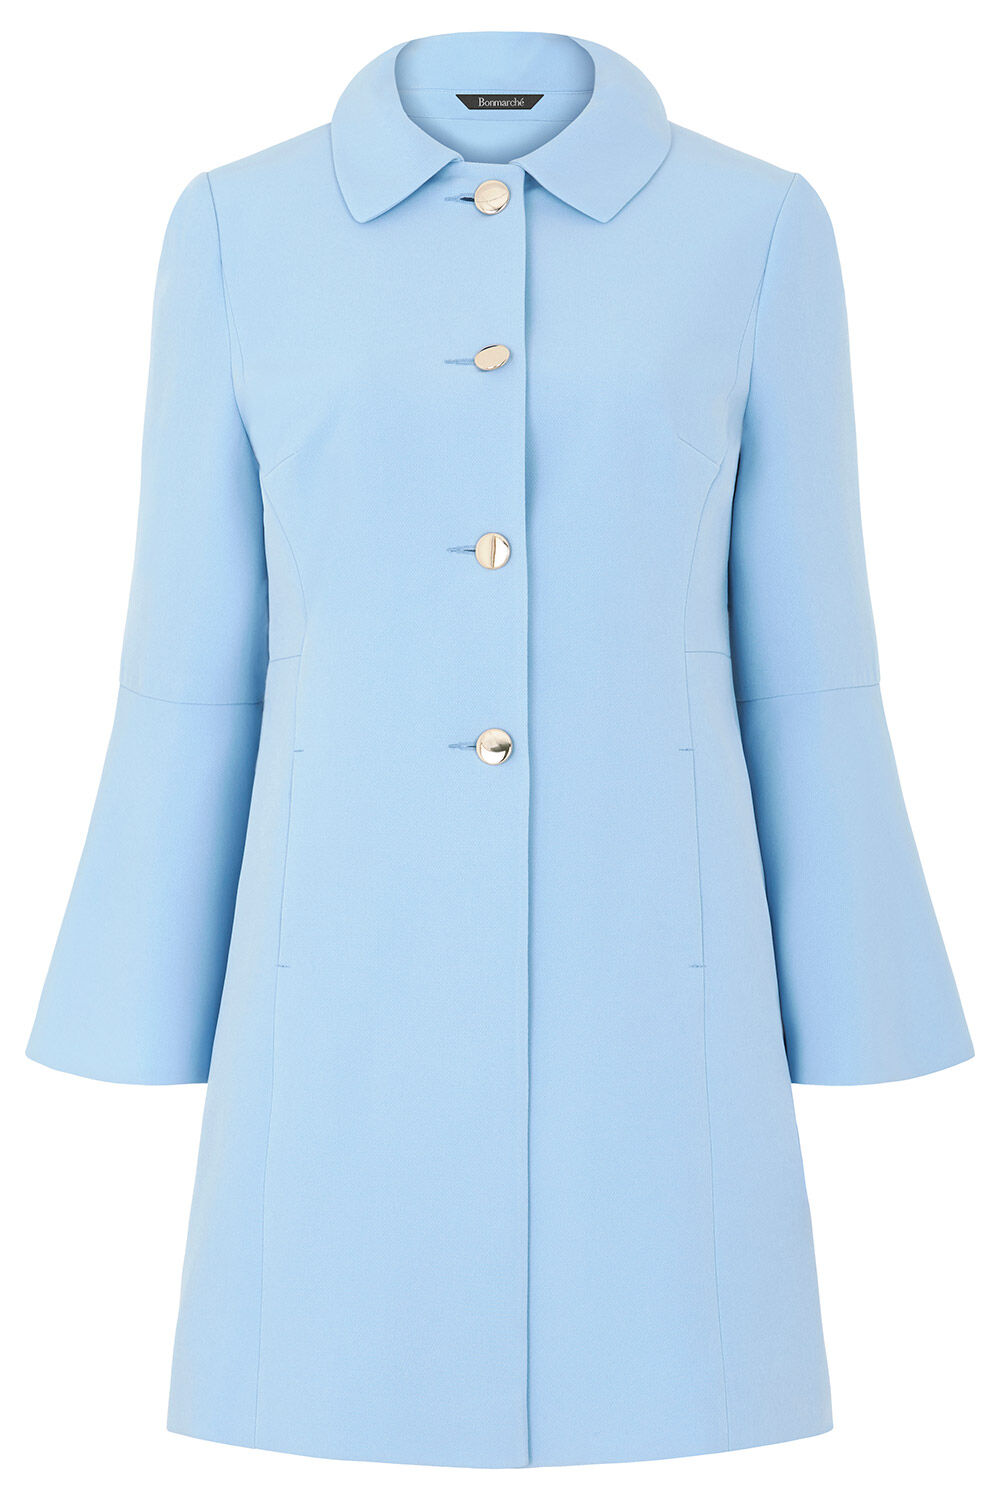 Bonmarche Blue Fluted Sleeve Smart Coat -, Size: 22